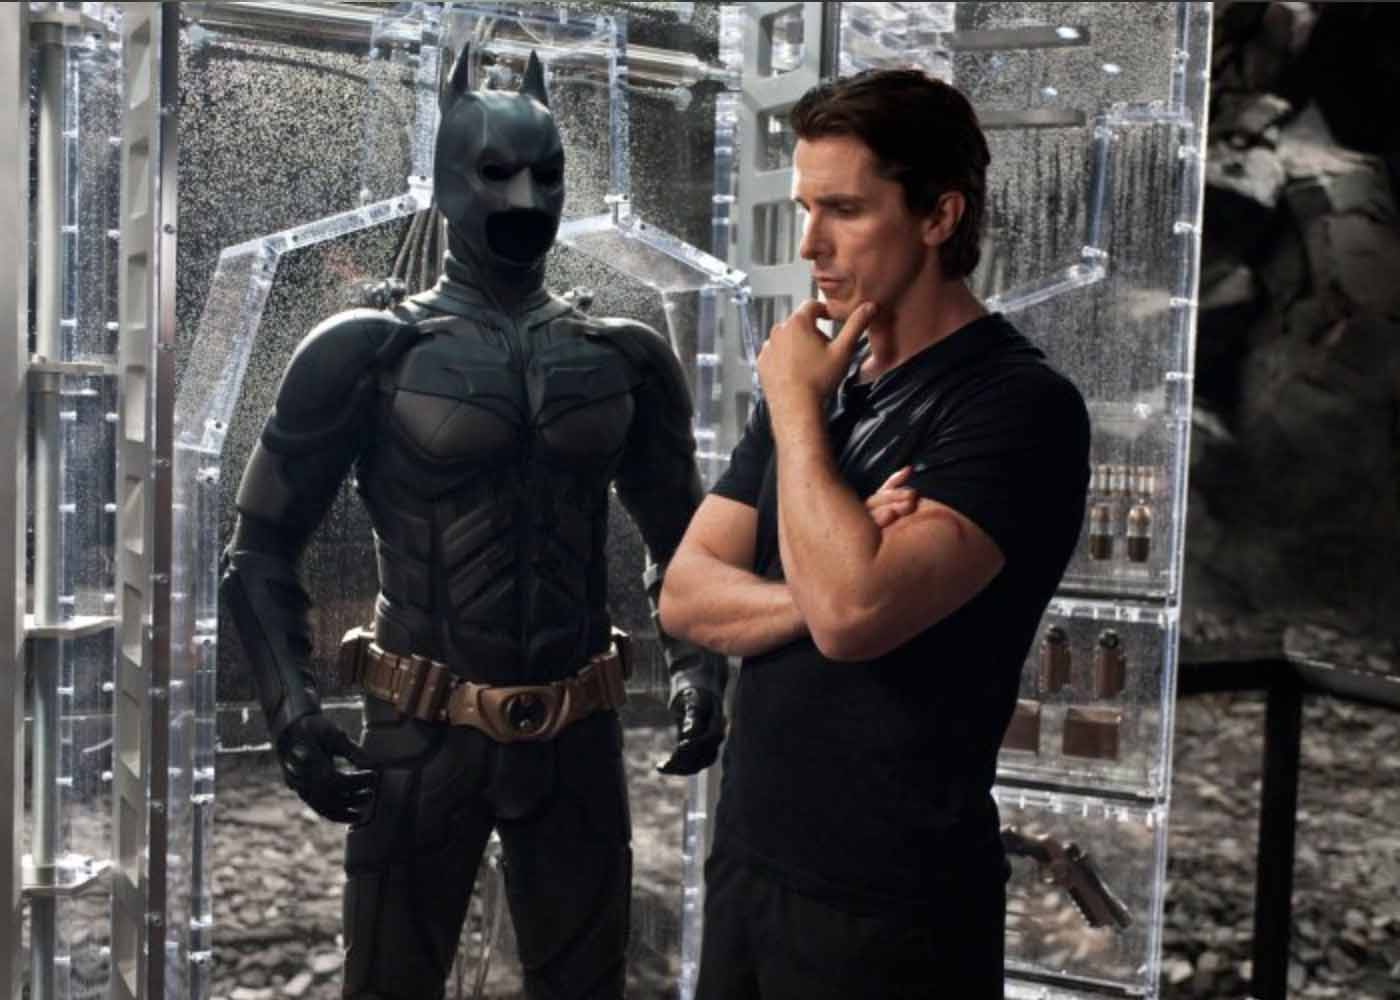 Christian Bale Not Interested in Returning to Superhero Films